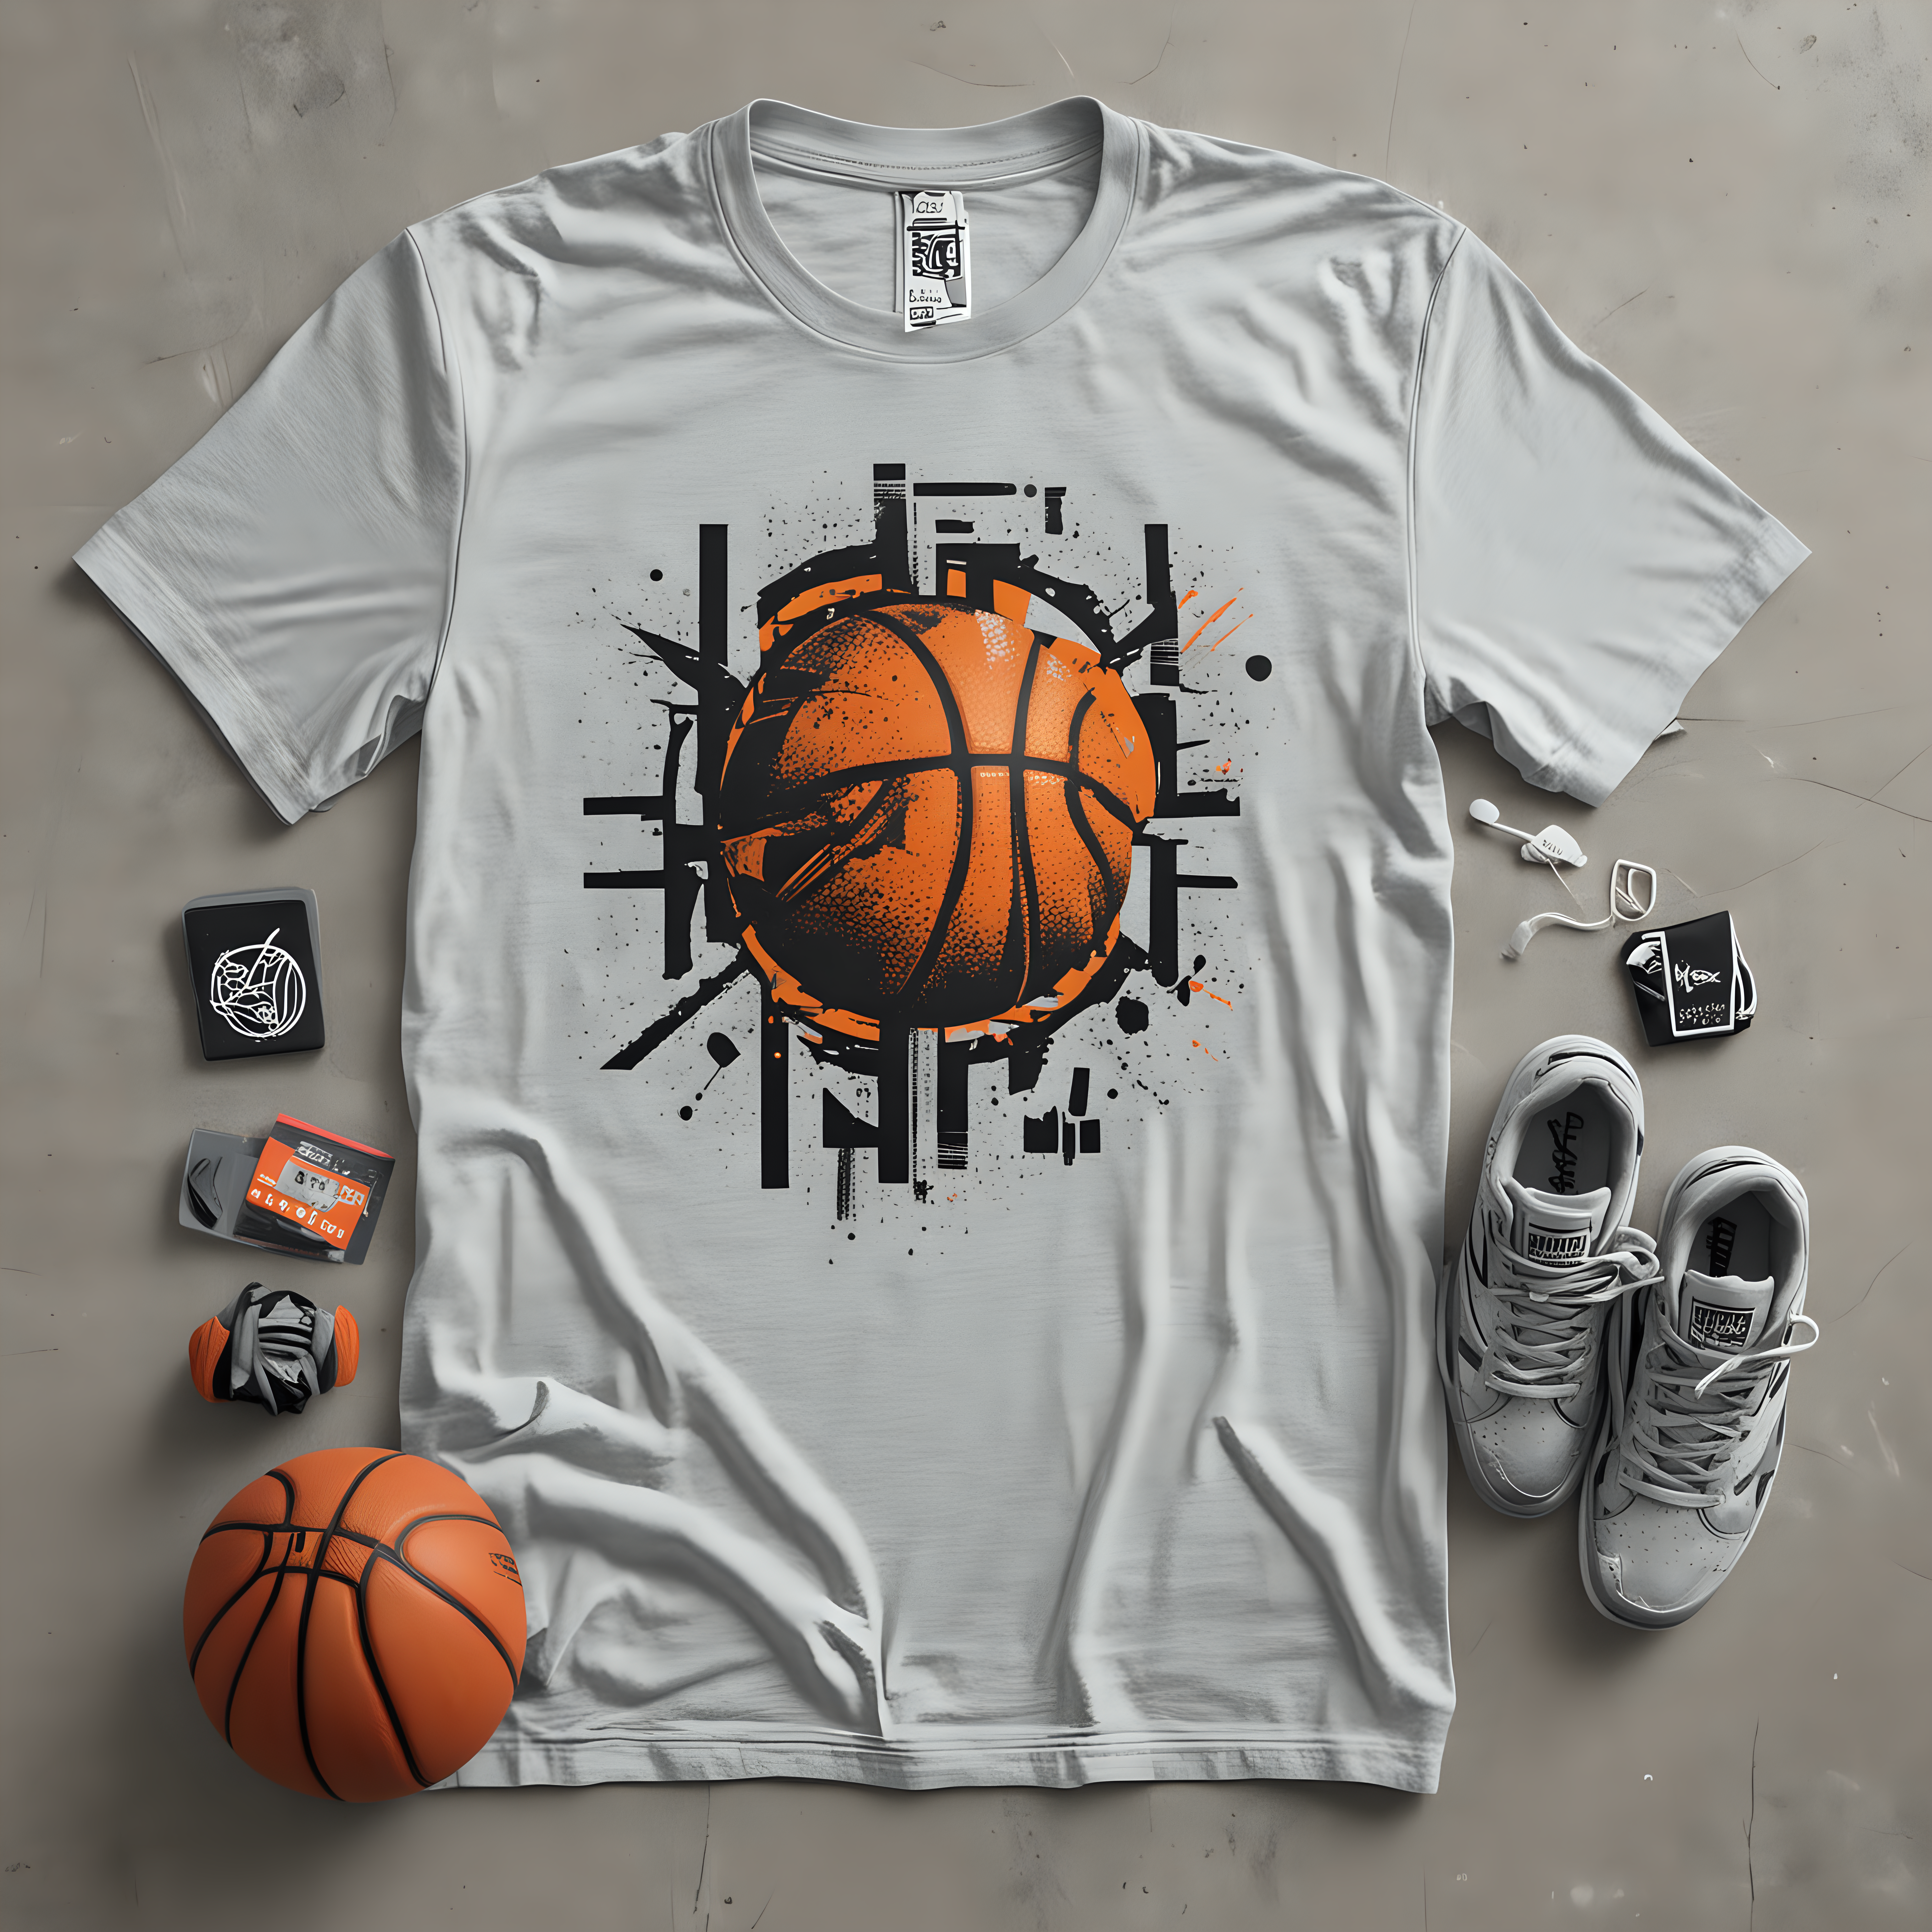 Modern Basketball TShirt Design in Grayscale for KF4 Brand